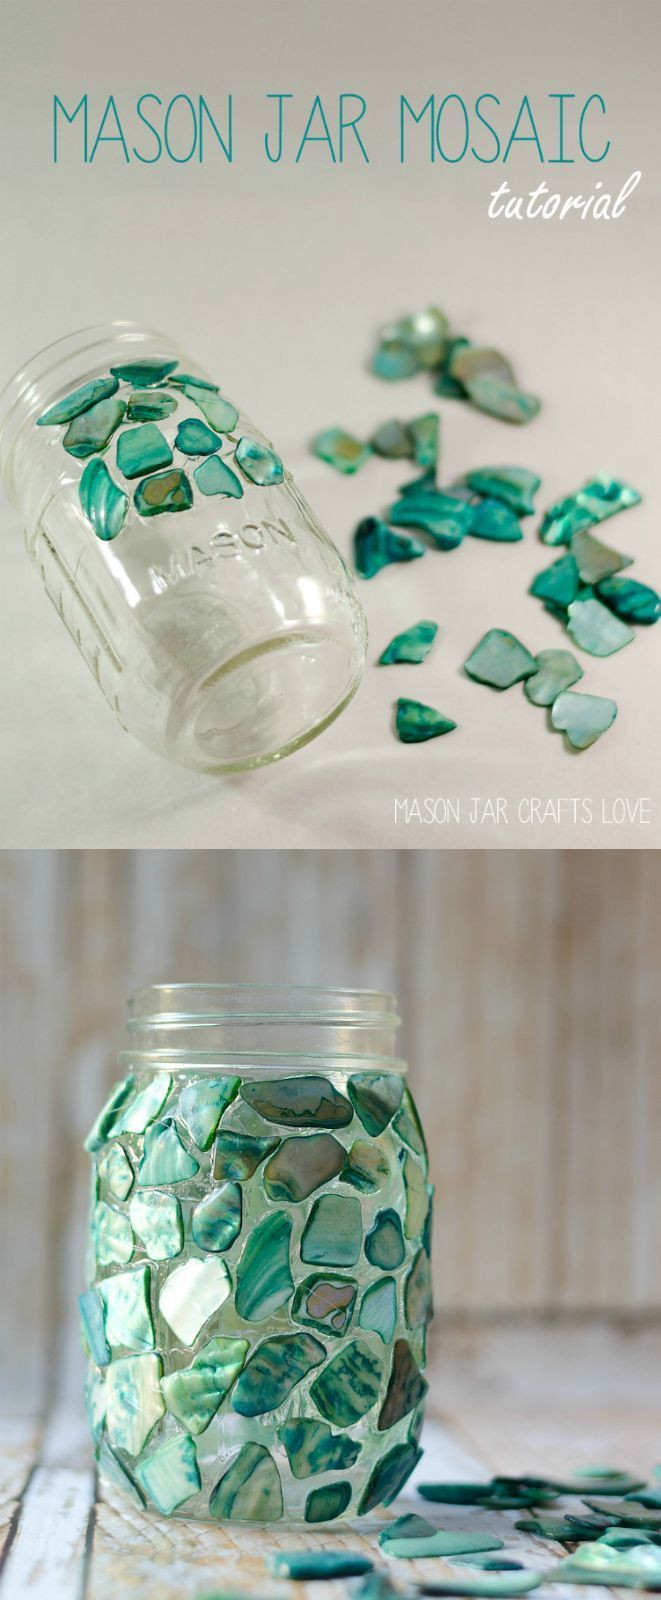 Best ideas about DIY Mason Jar Crafts
. Save or Pin Best 25 Mason jar crafts ideas on Pinterest Now.